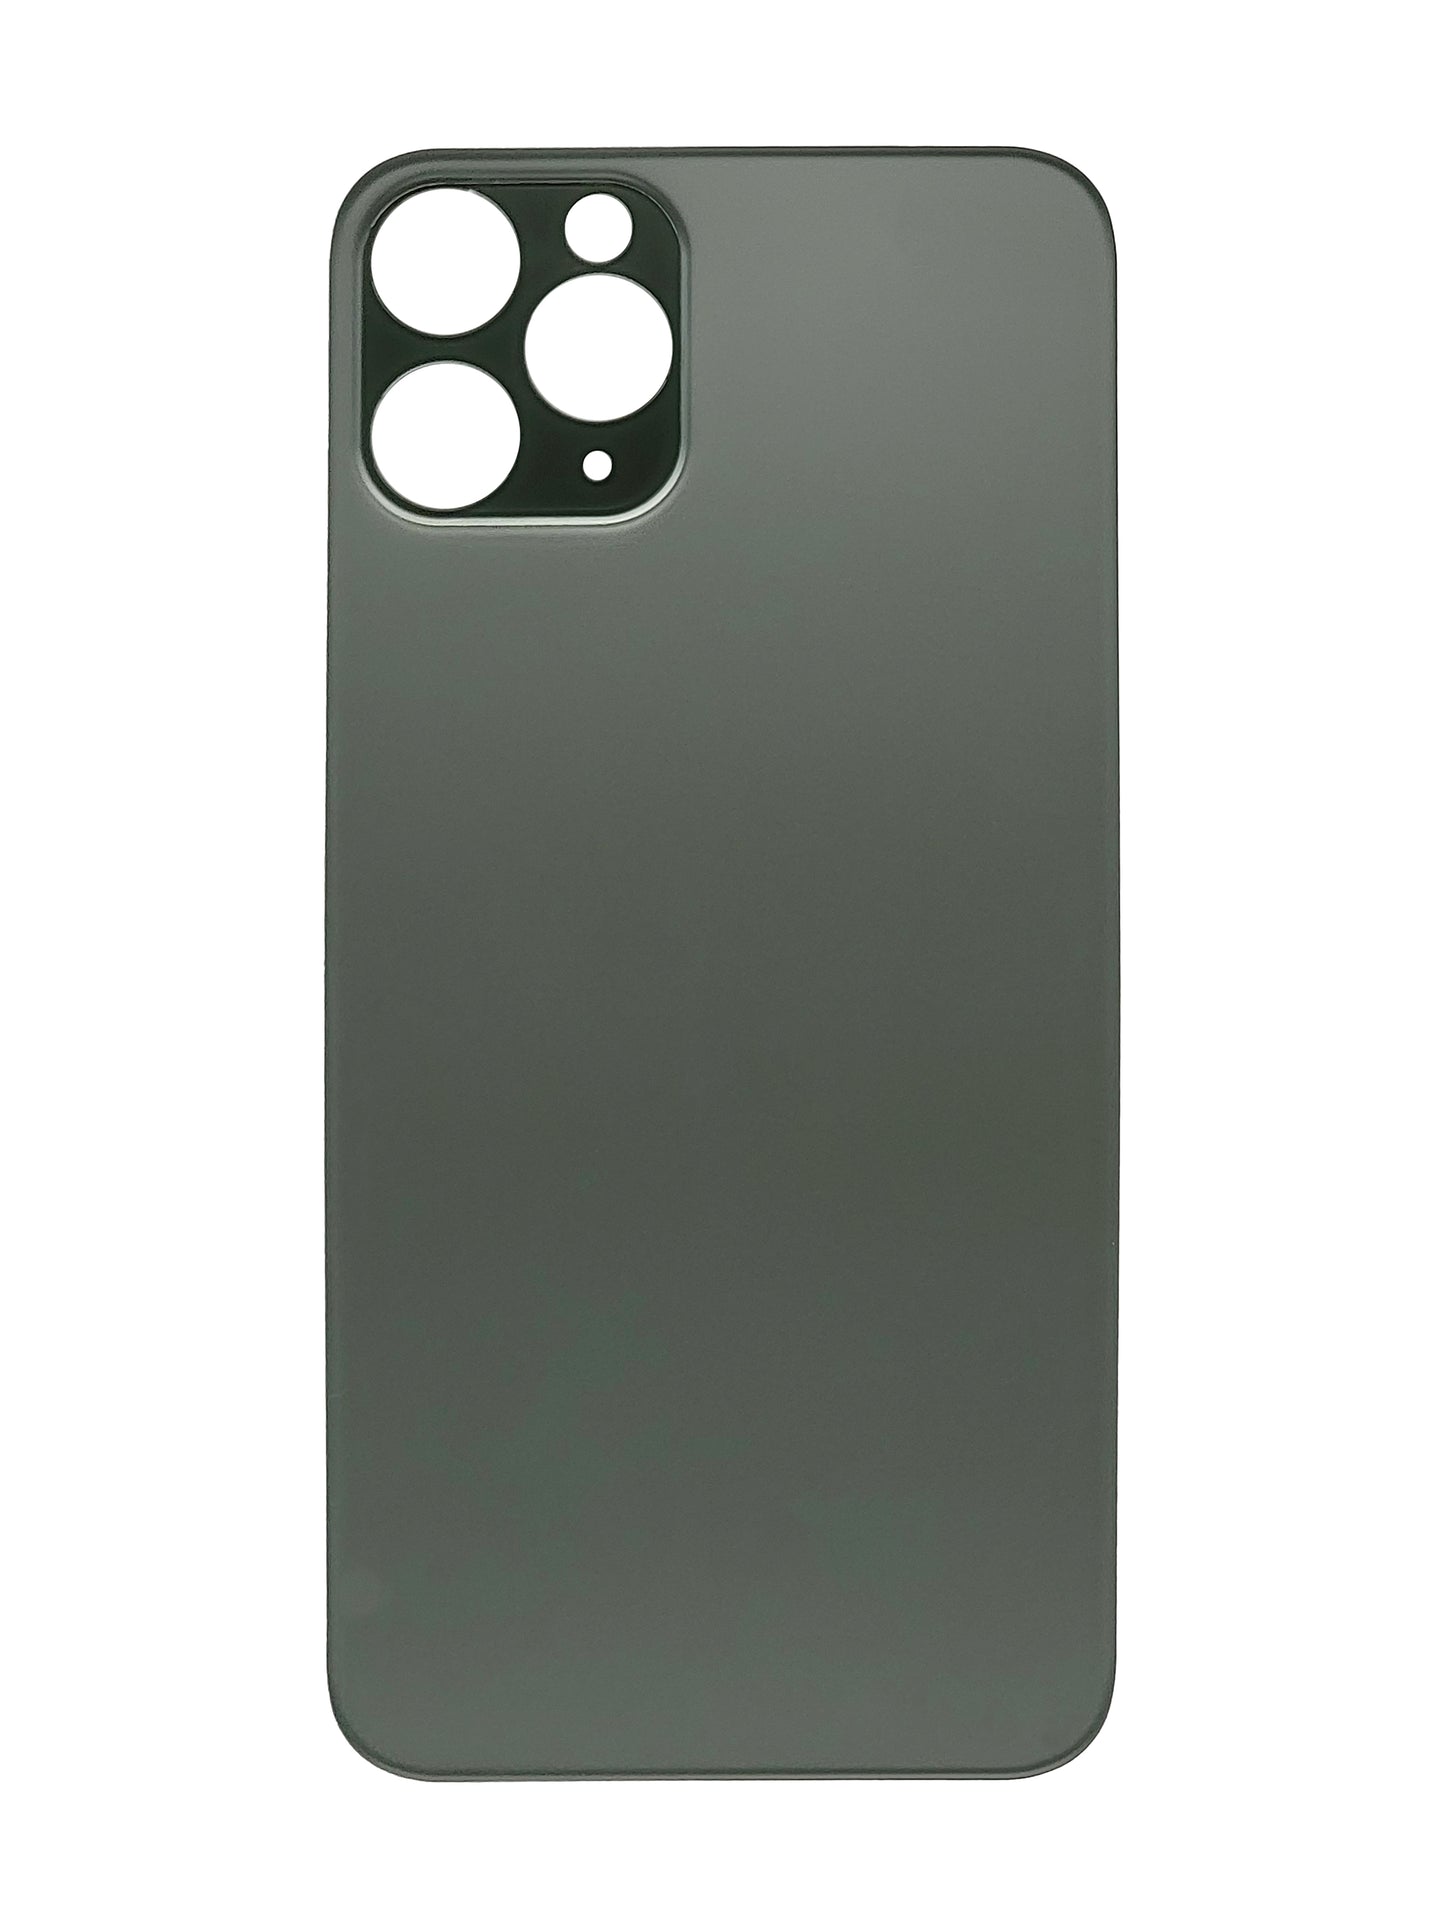 iPhone 11 Pro Back Glass (No Logo) (Green)